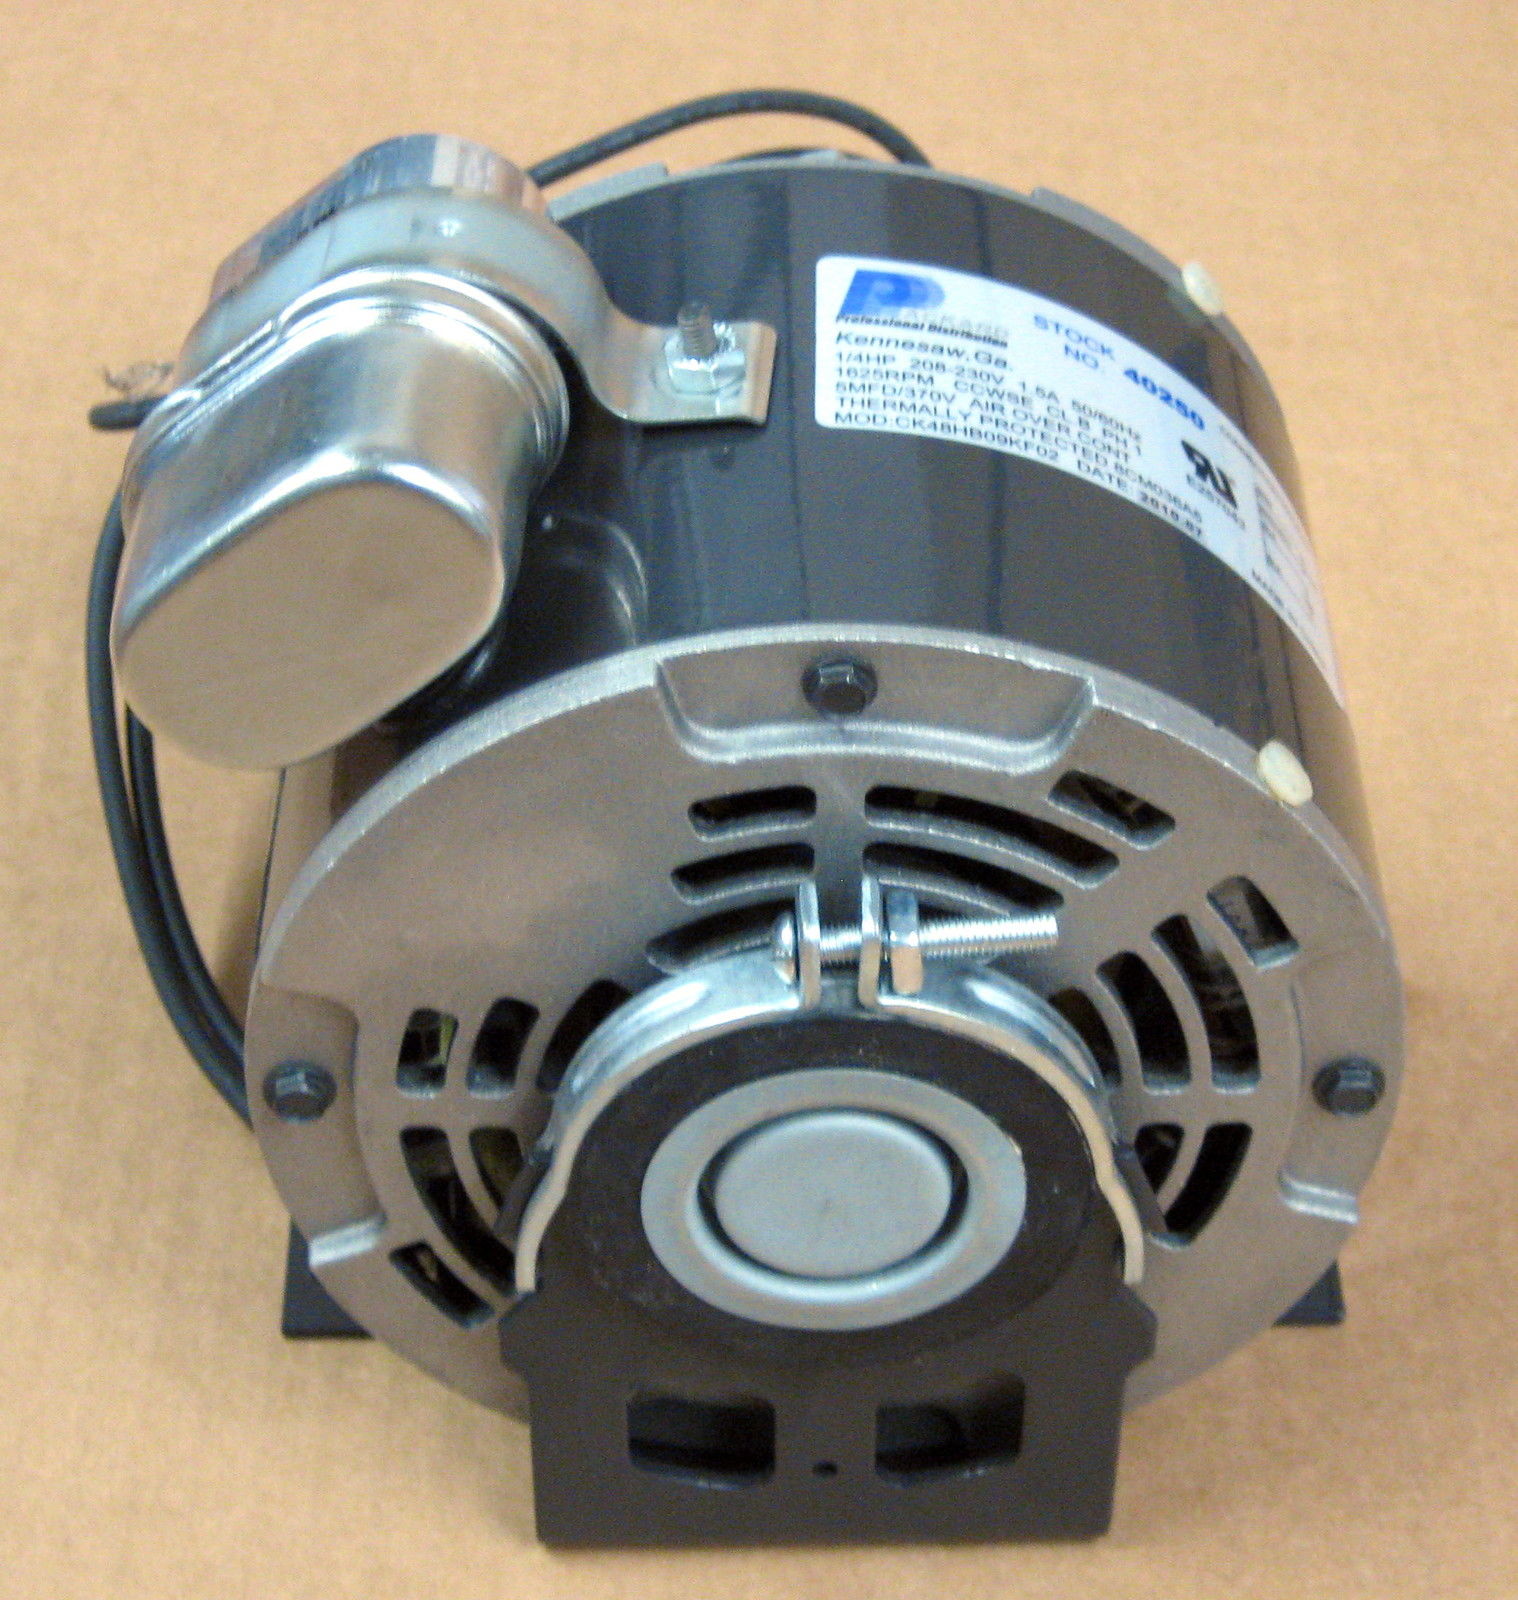 40250 Refrigeration Motor for Copeland 950-0250-00 050-0250-00 K55HXJZJ3126 - image 5 of 5